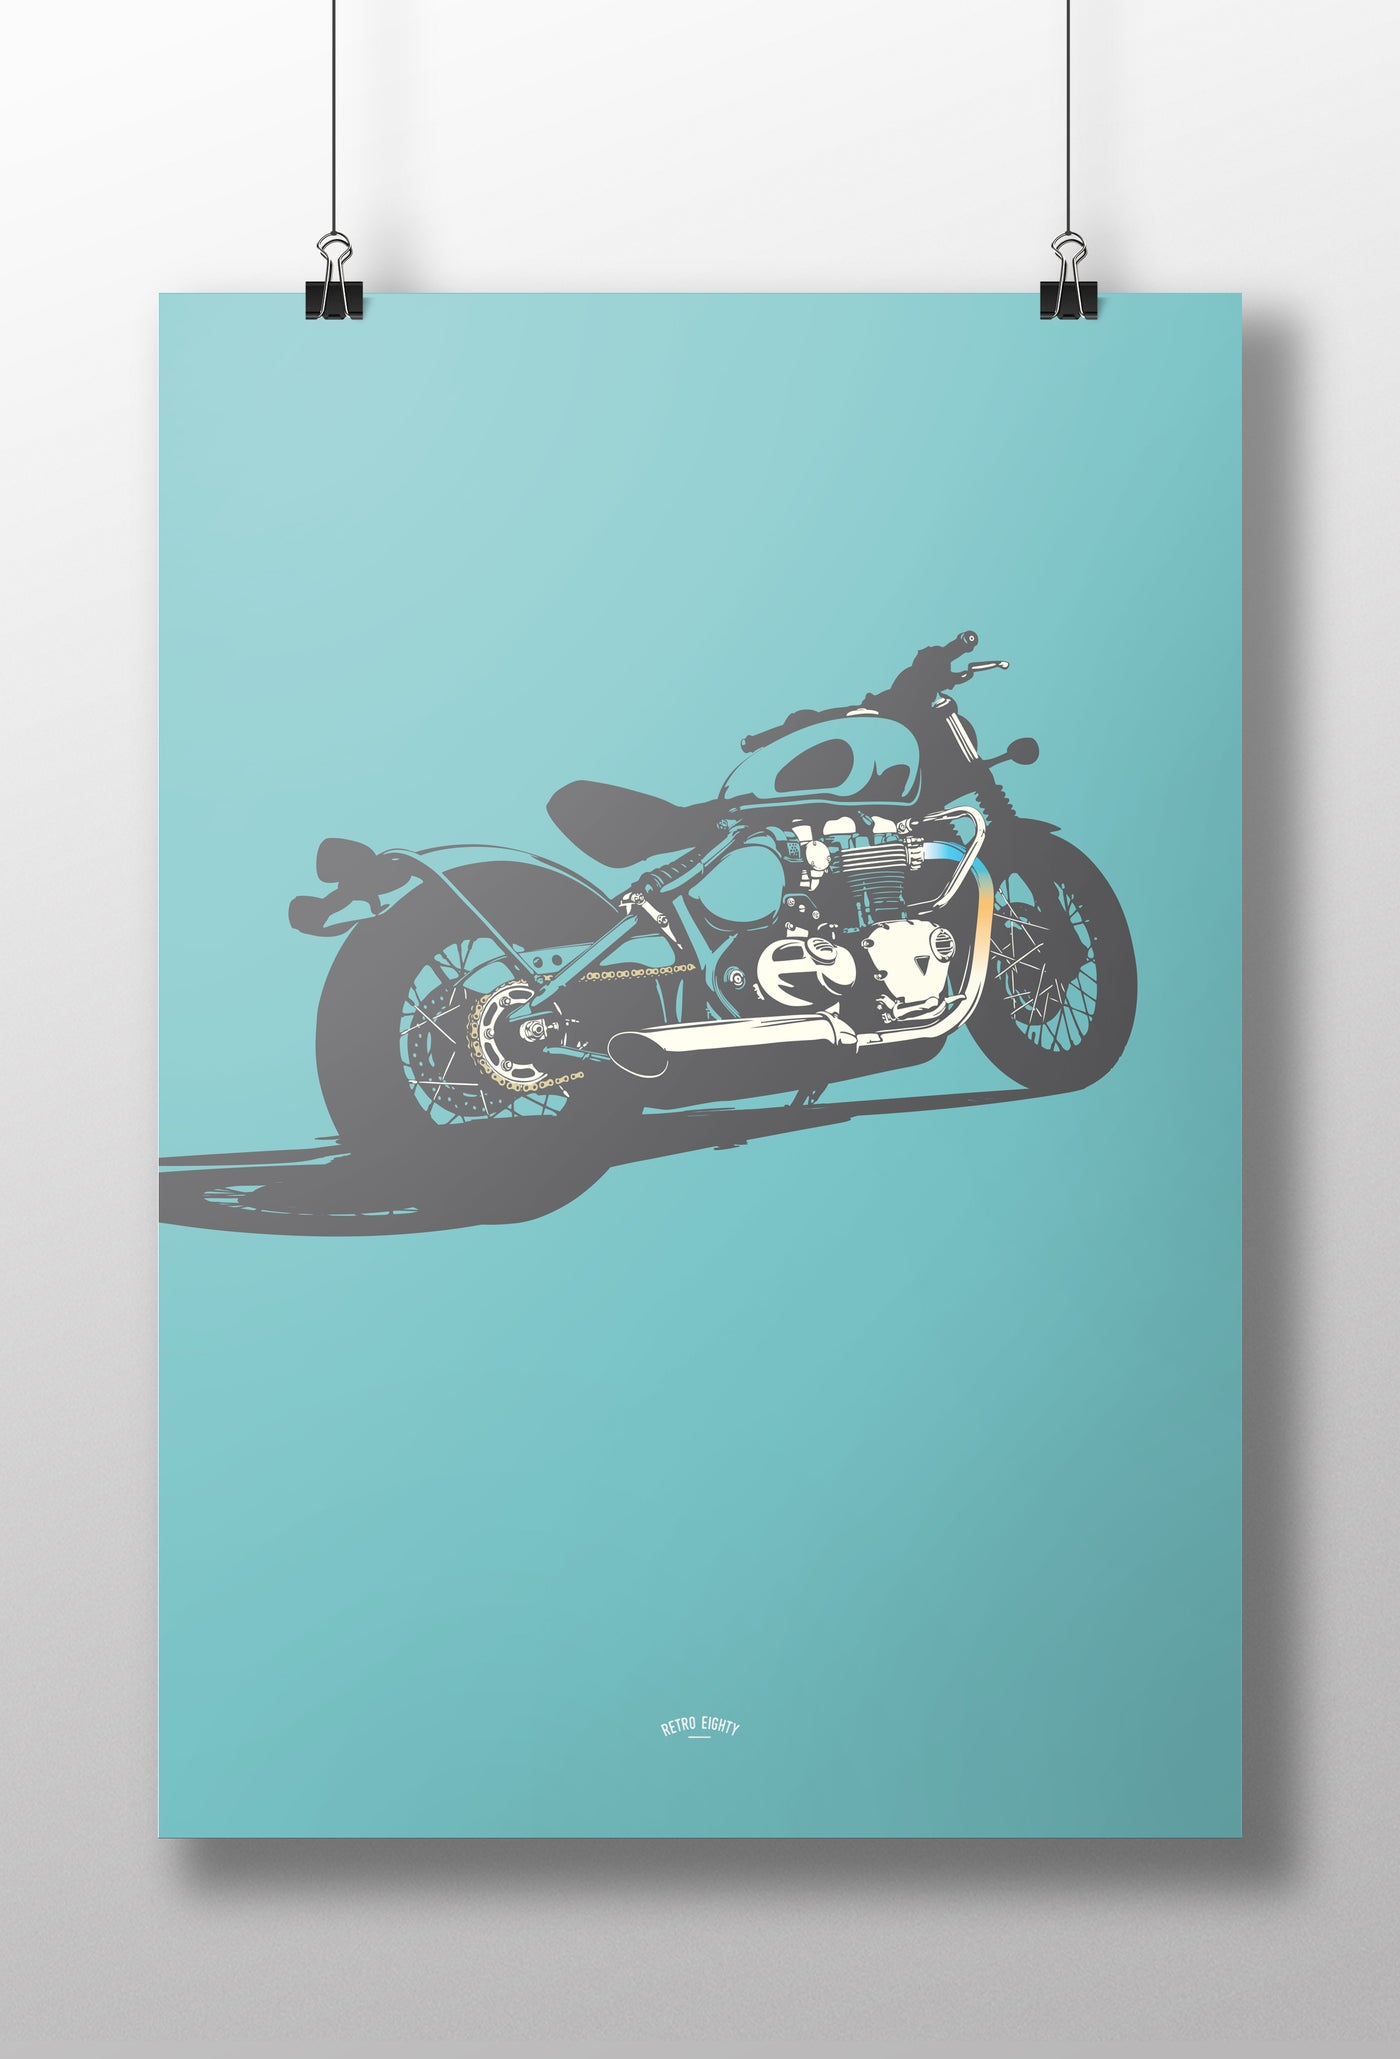 Bobber Motorcycle print